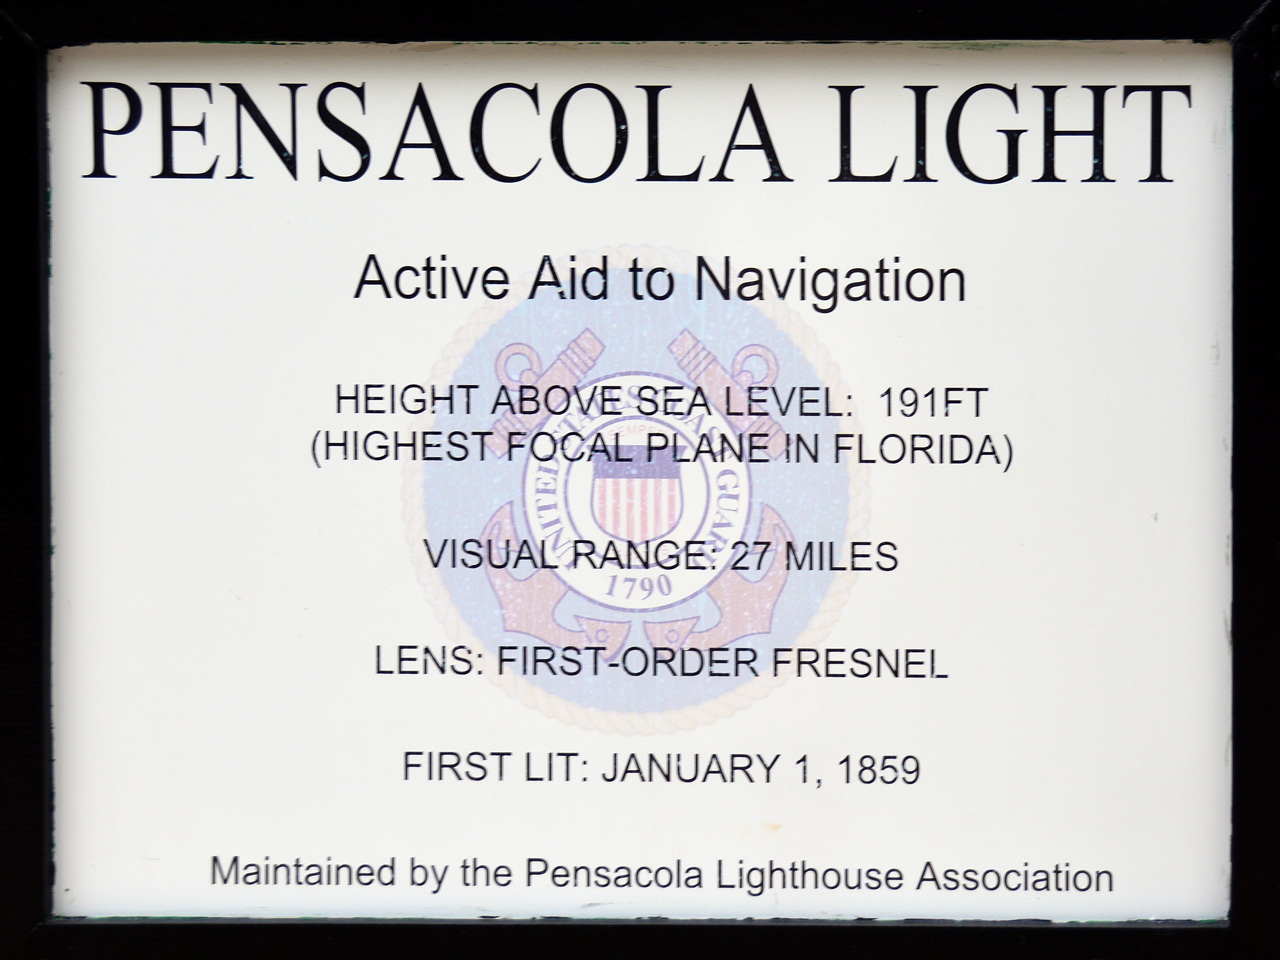 2014-11-05, 002, Pensacola Lighthouse Museum